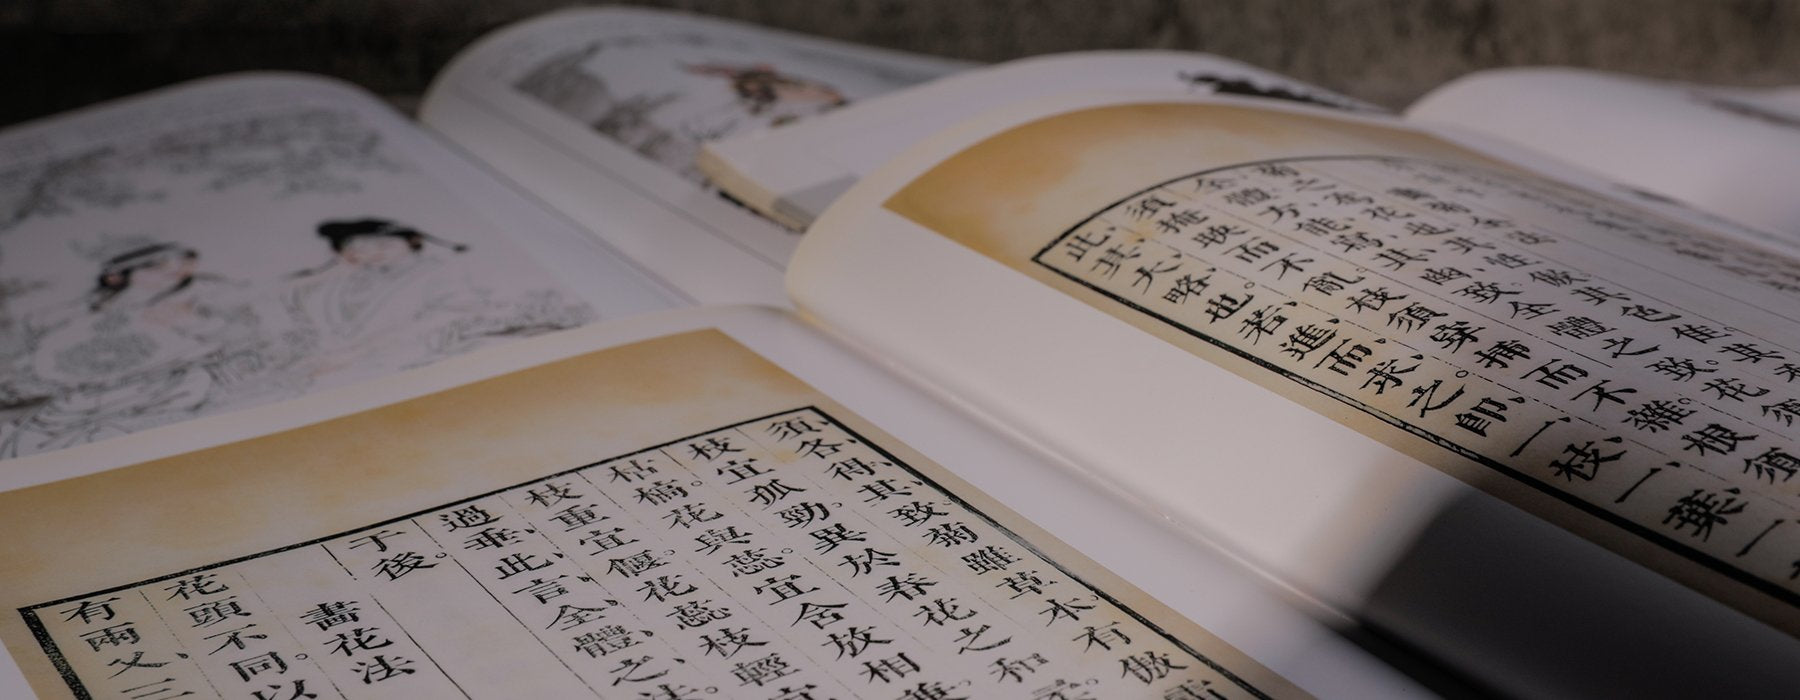 Chinese Calligraphy Books